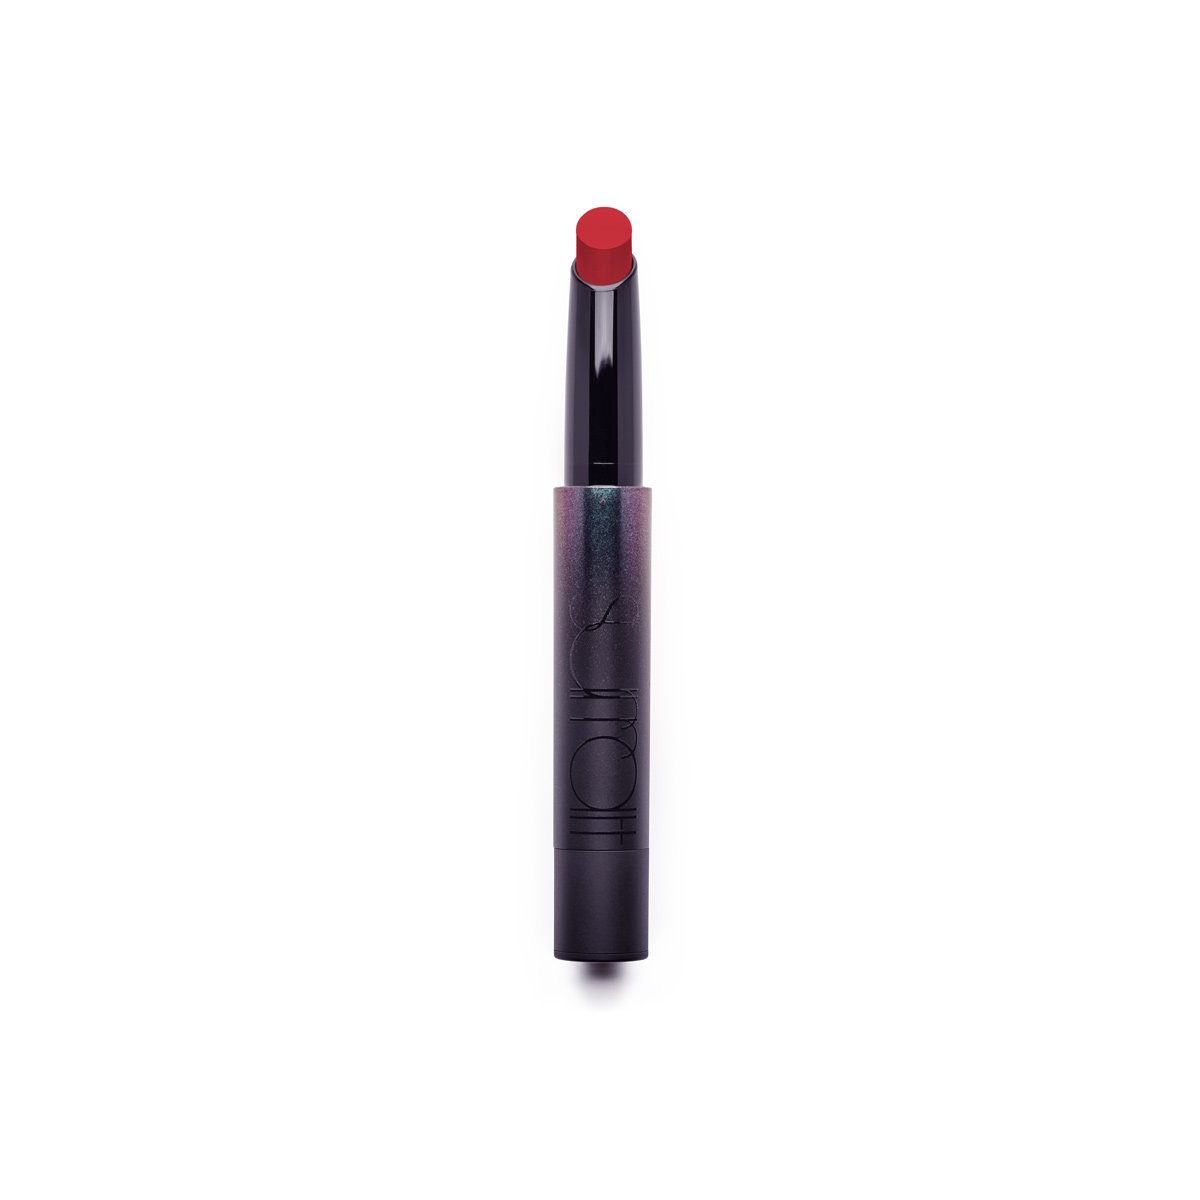 RUBIS - BLUE RED - creamy moisturizing lipstick lip balm in blue red shade